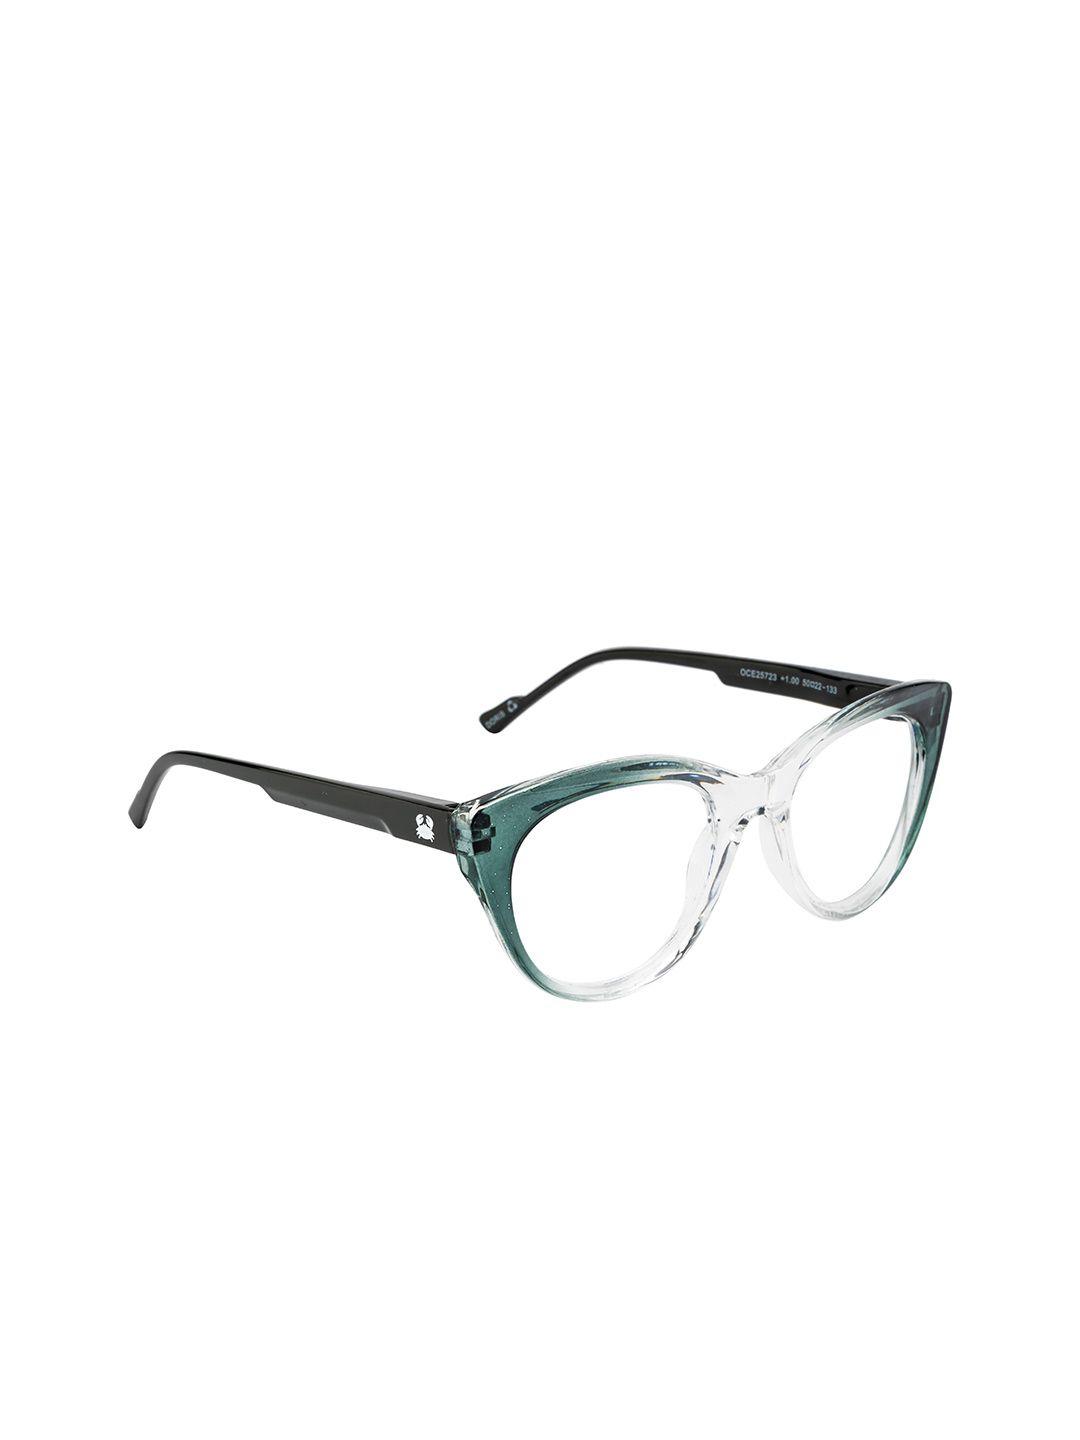 oceanides unisex clear lens & green cateye sunglasses